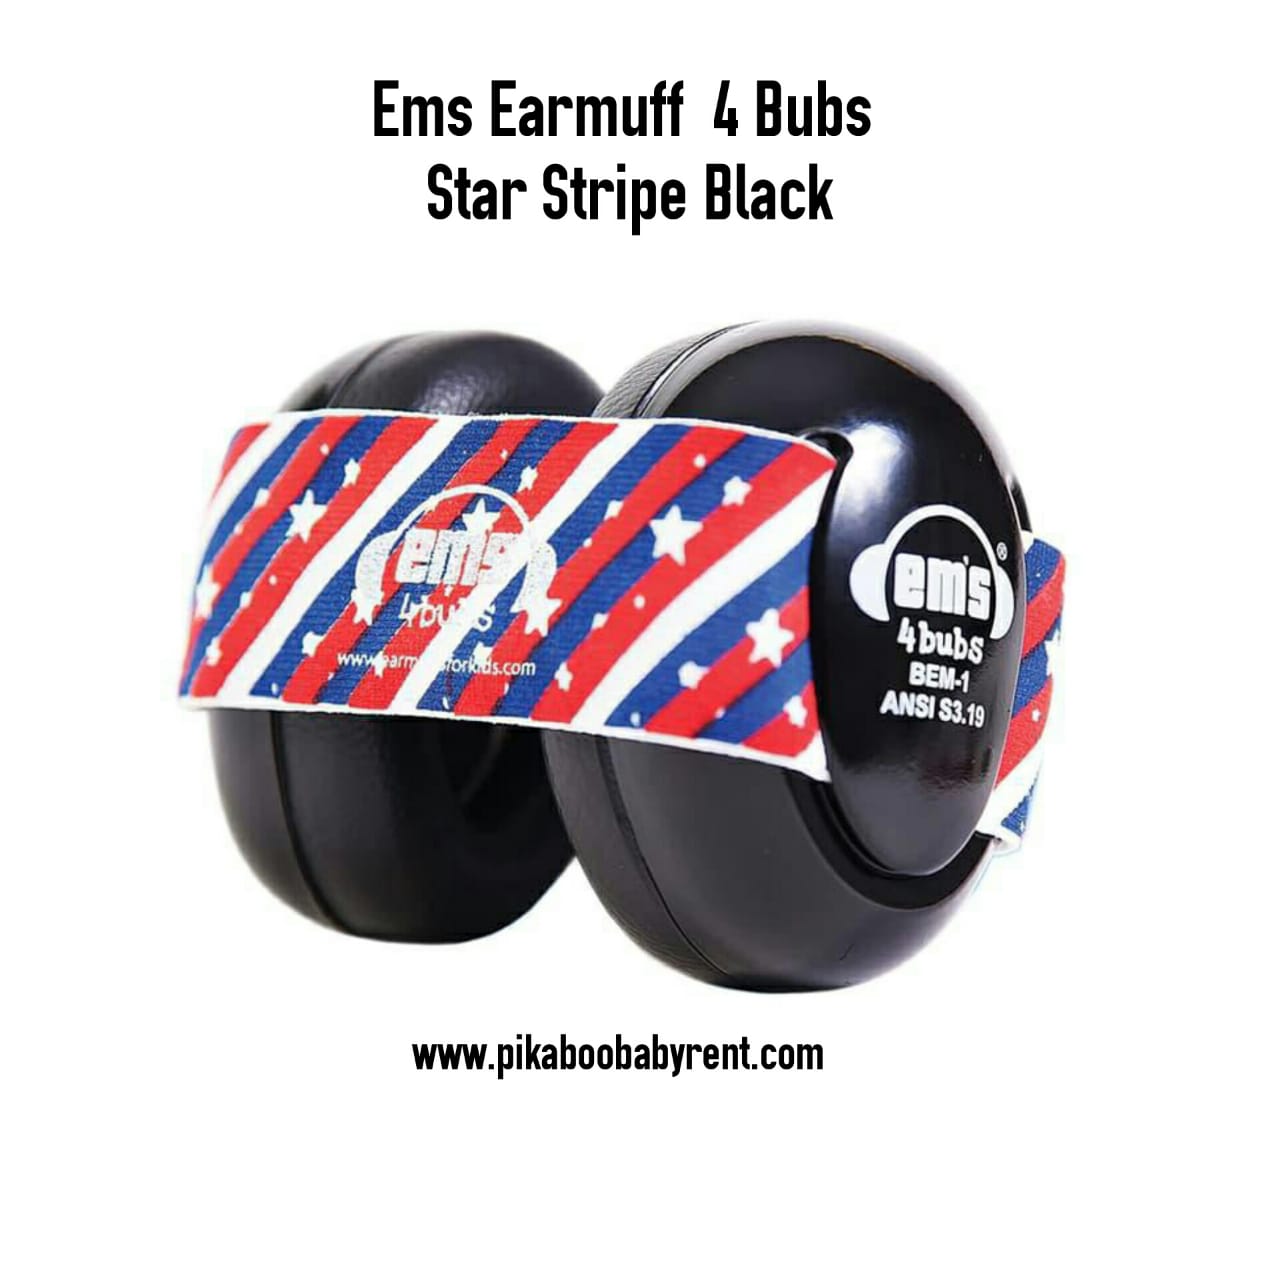 EMS EARMUFF 4 BUBS STAR STRIPE BLACK